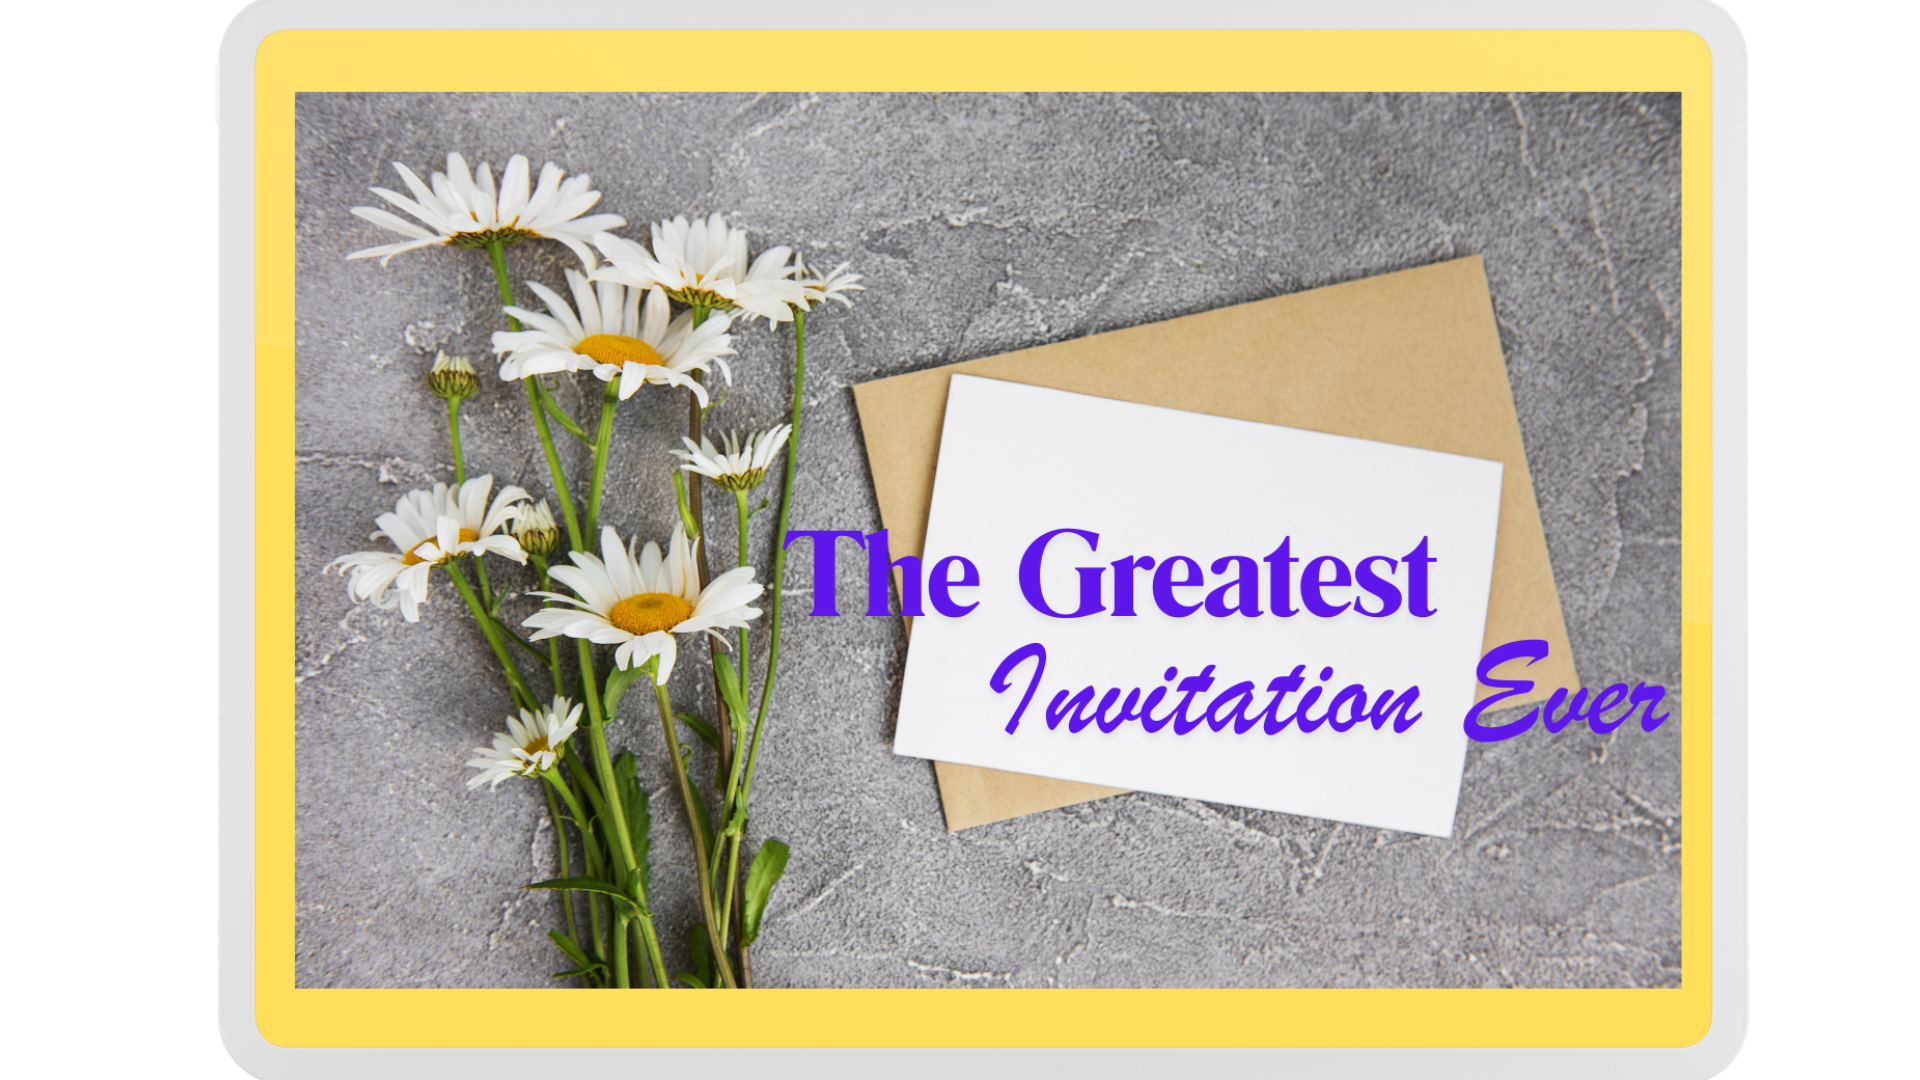 The Greatest Invitation Ever!